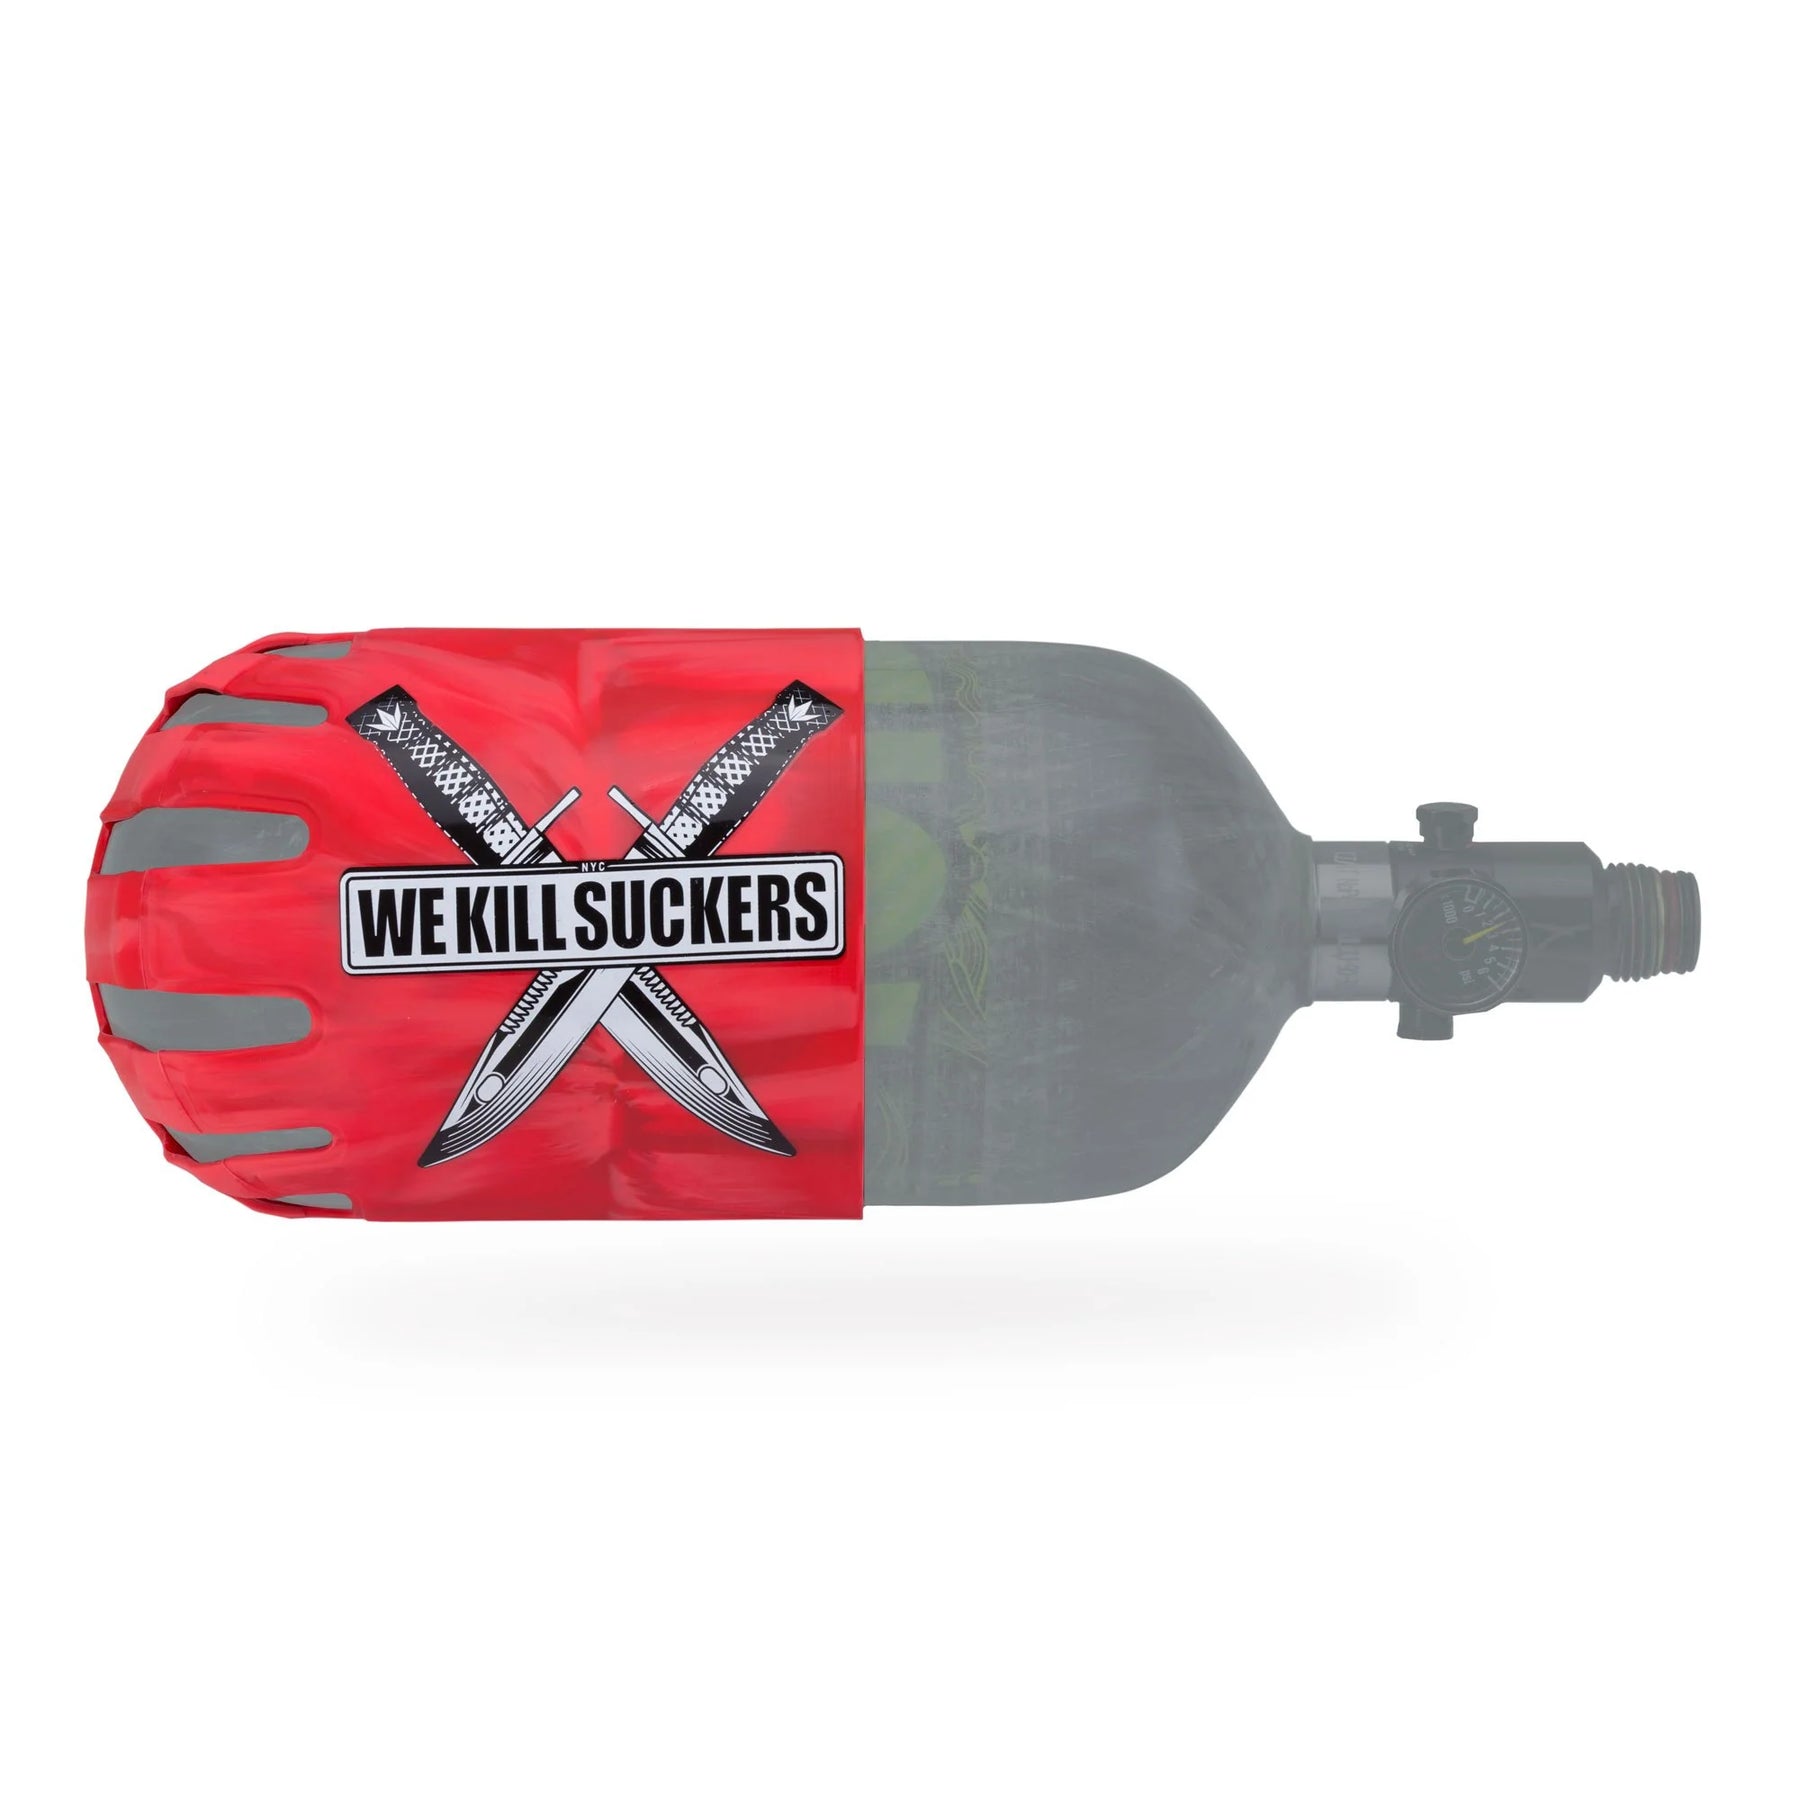 Bunkerkings - Knuckle Butt Paintball Air Tank Cover - WKS Knife - Red